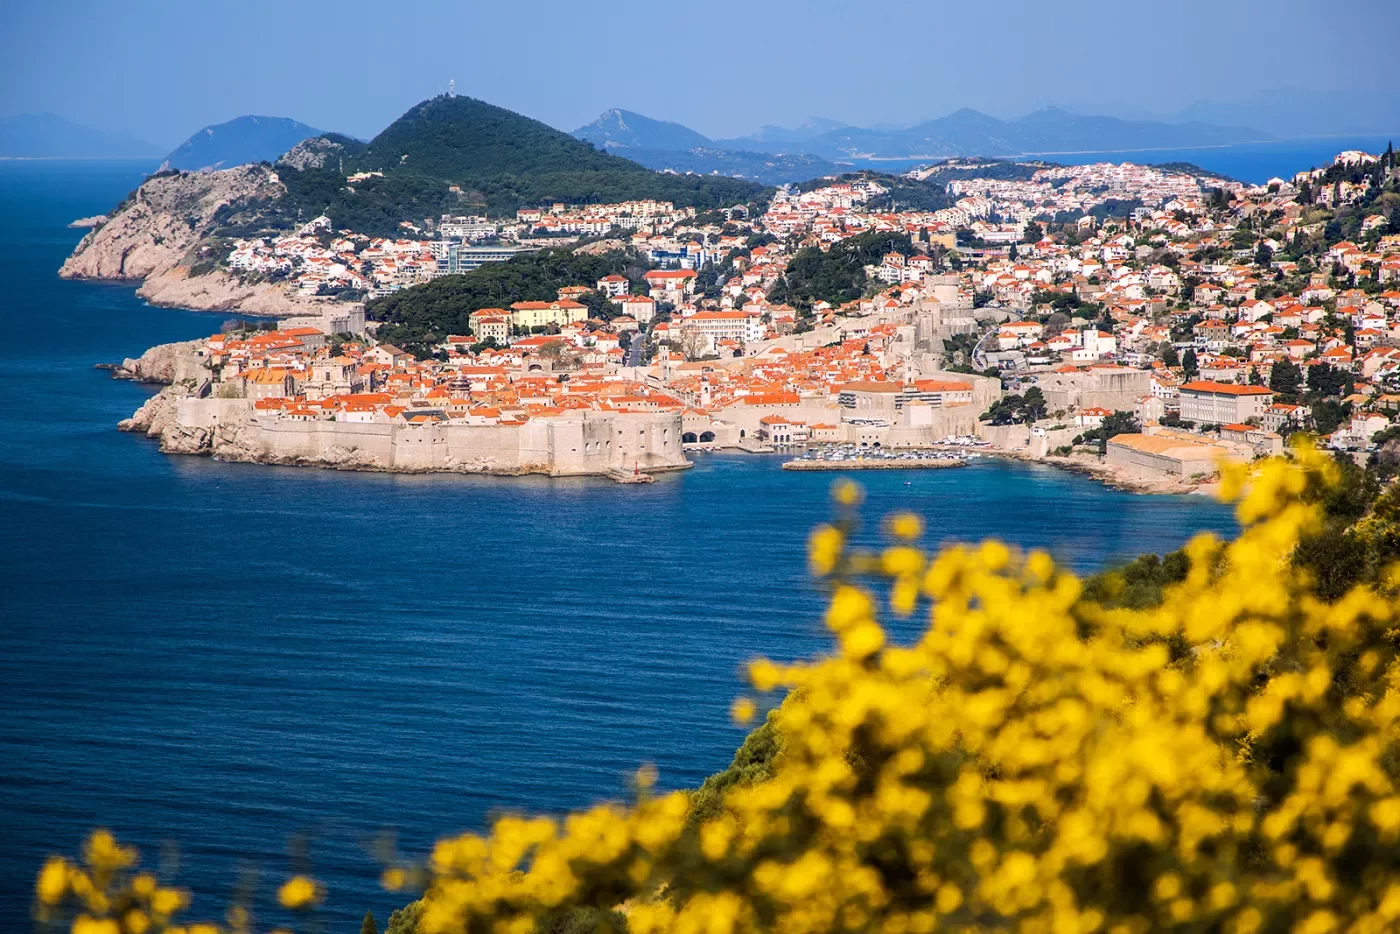 Wide shot of Dubrovnik coastline, blue ocean, white and tan houses.